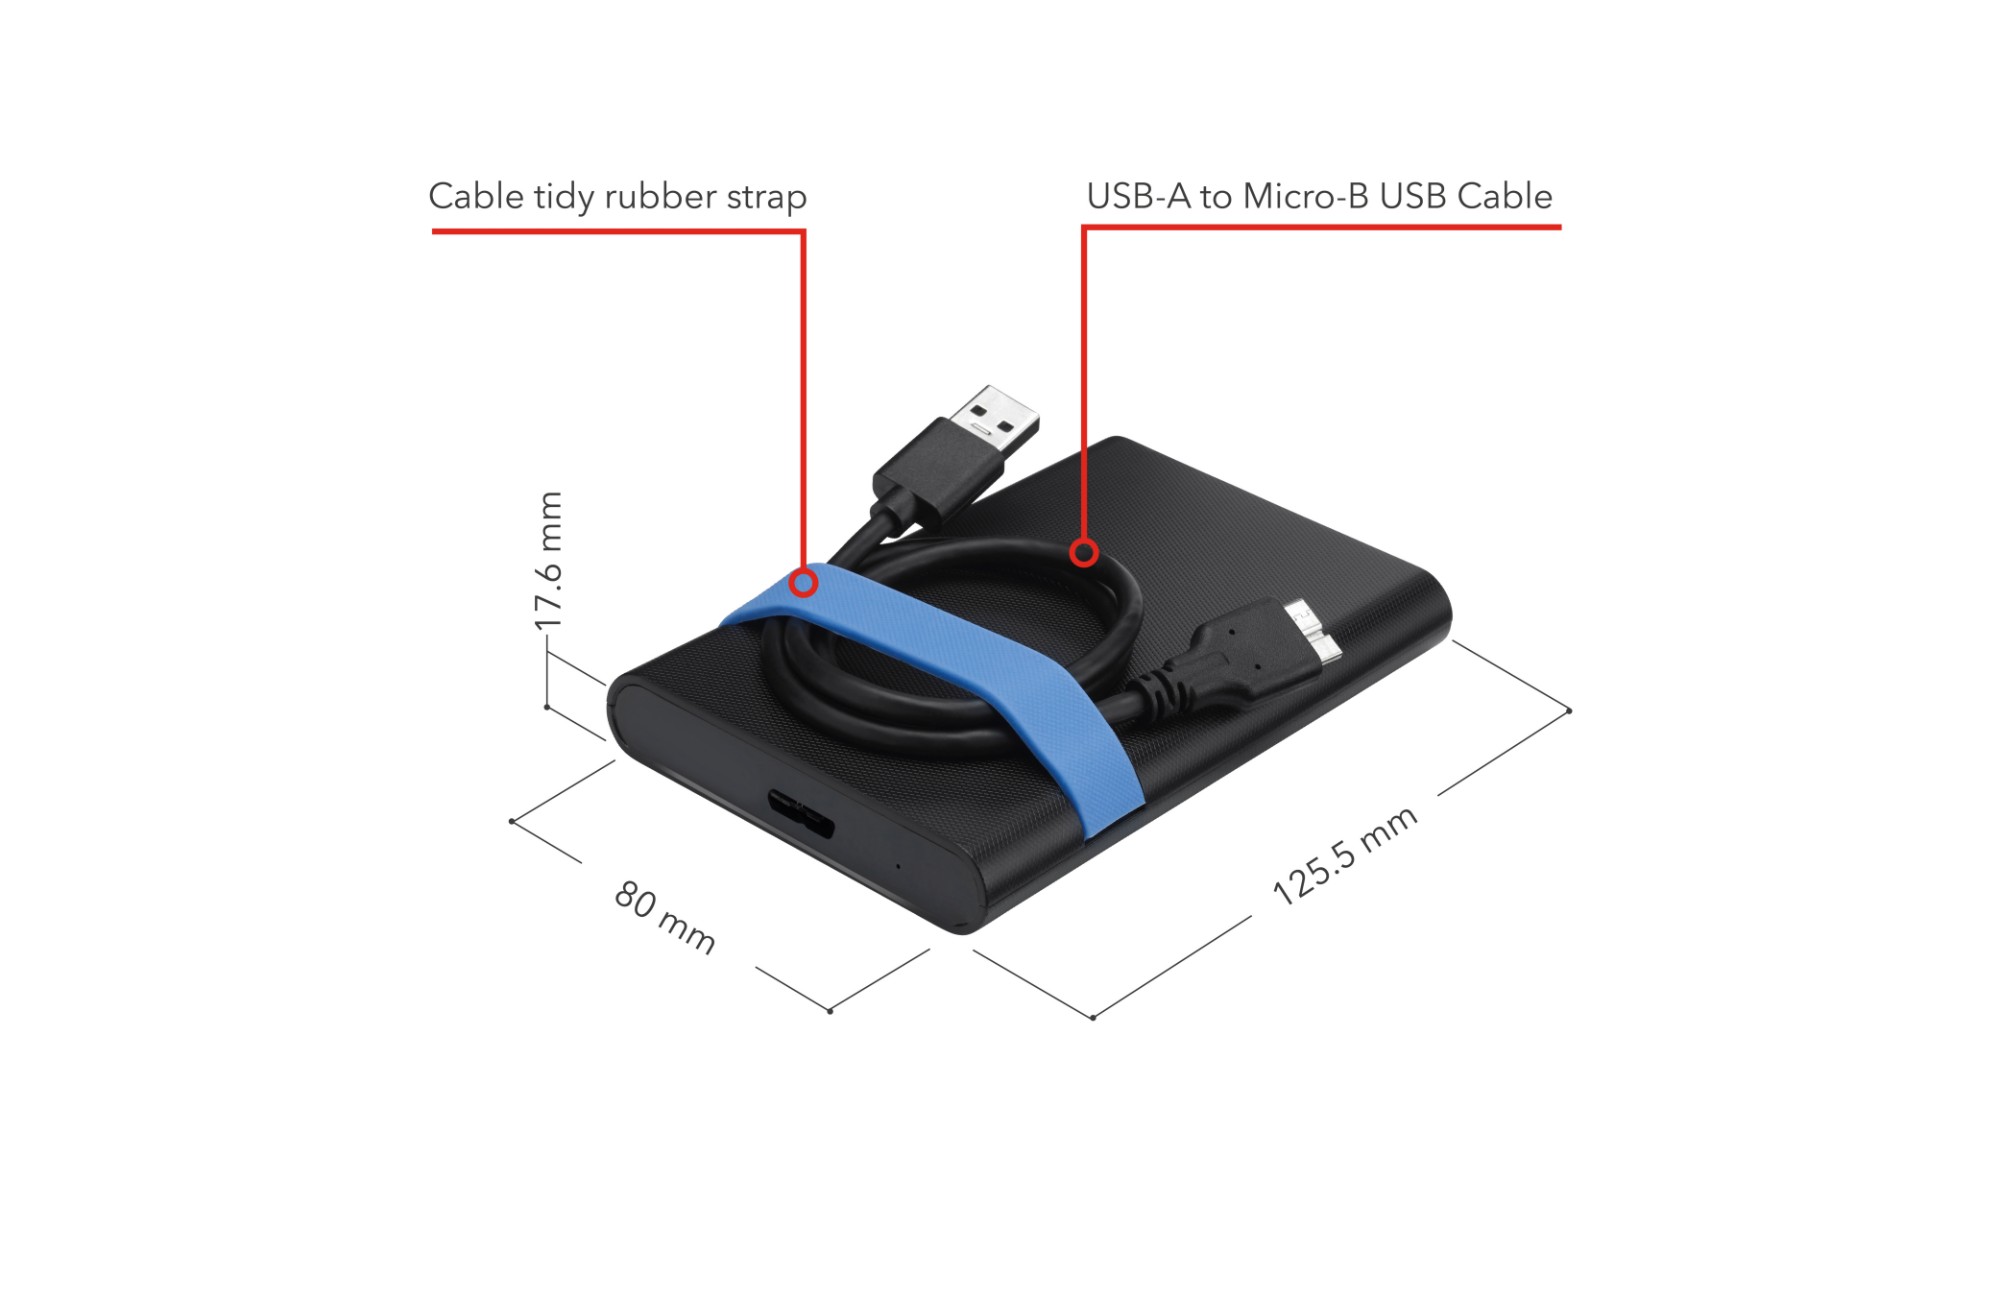 Verbatim Store'N'Go Enclosure Kit HDD/SSD enclosure Black, Blue 2.5"